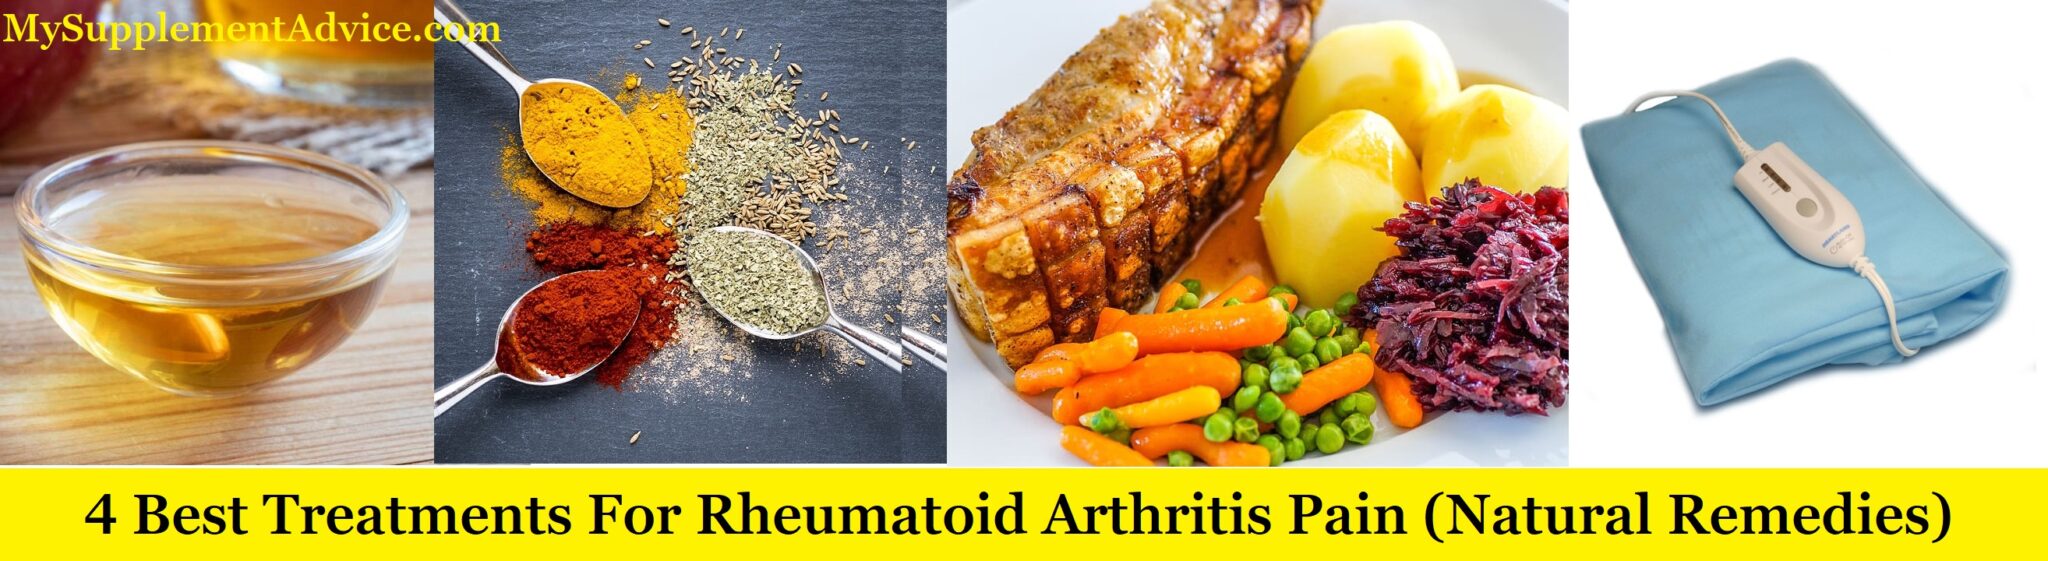 4 Best Treatments For Rheumatoid Arthritis Pain (Natural Remedies)